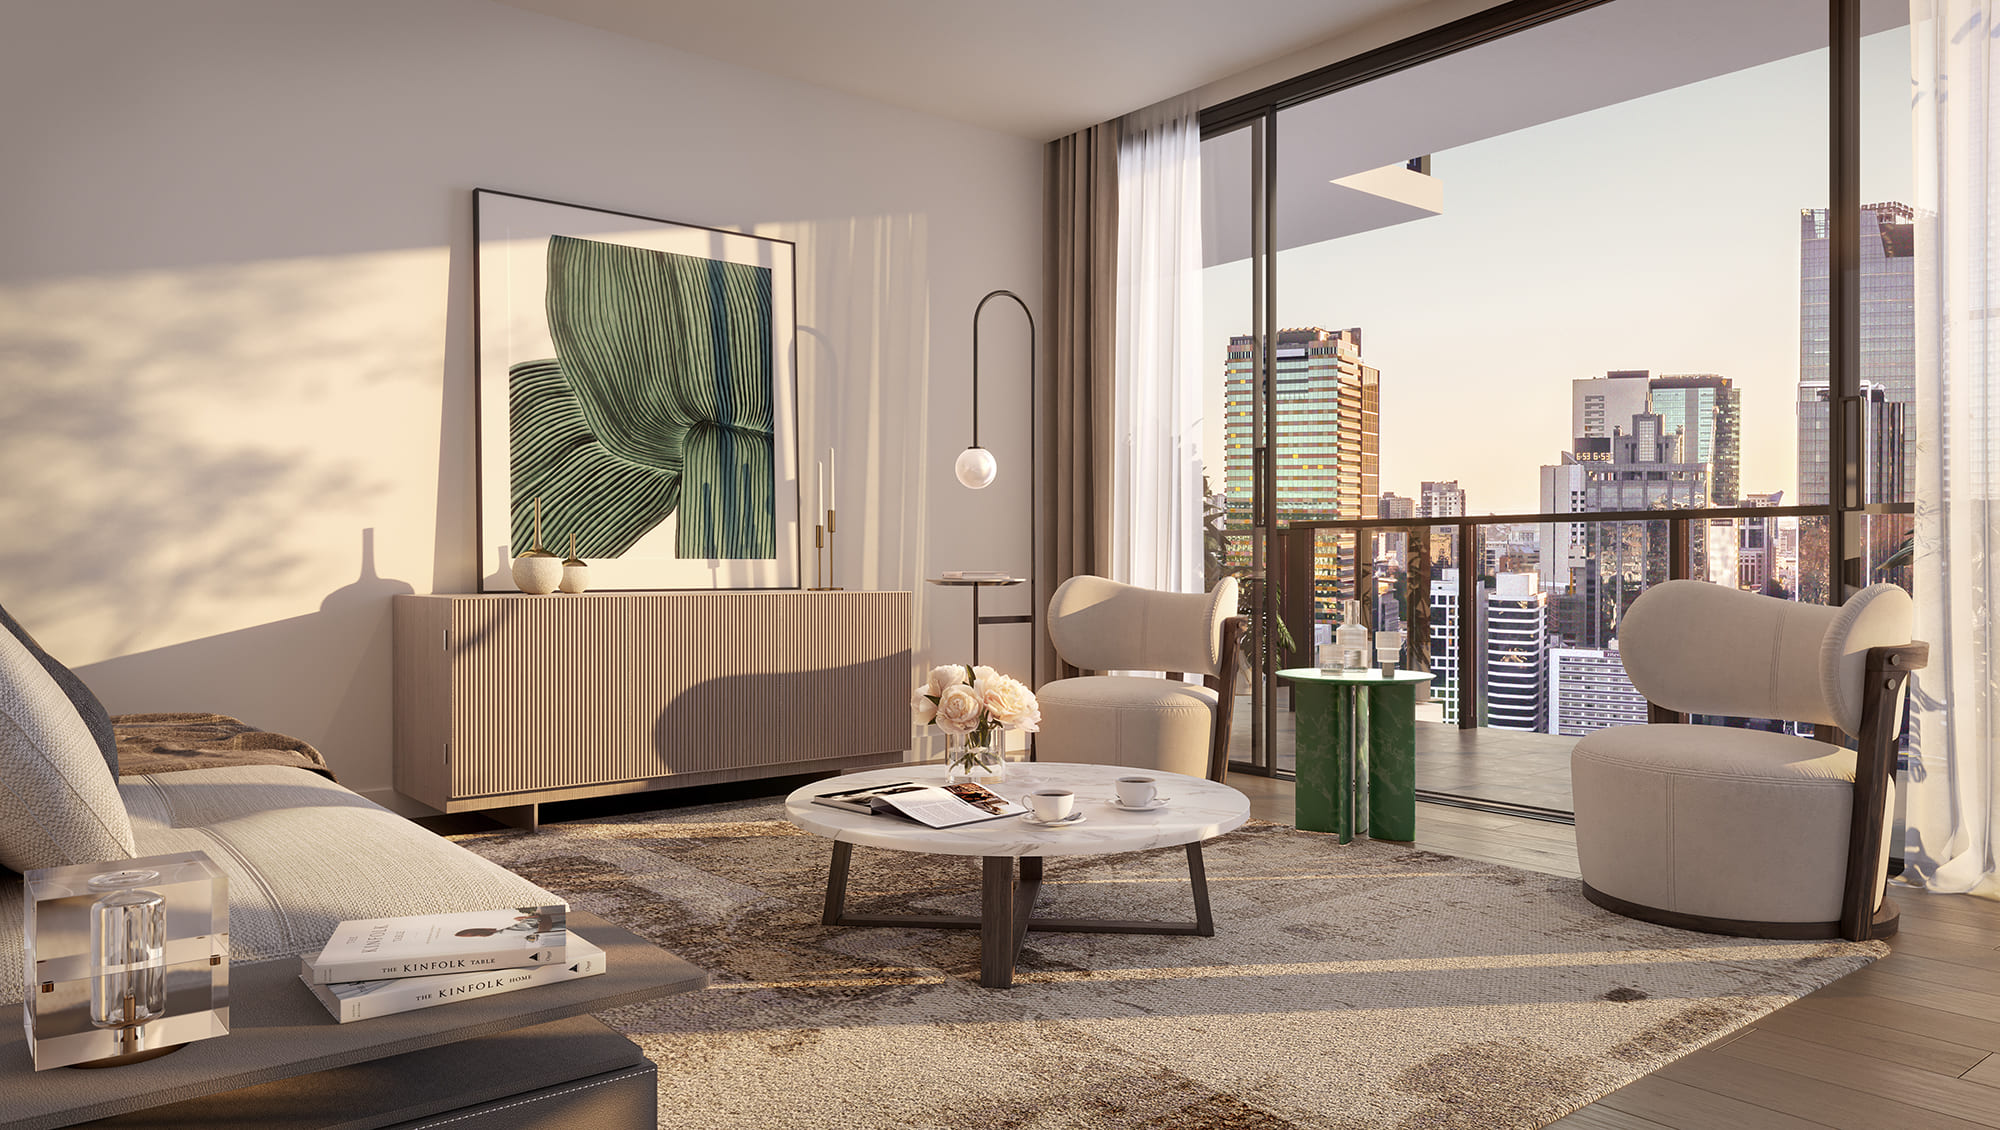 Akin living room render with view of Brisbane skyline